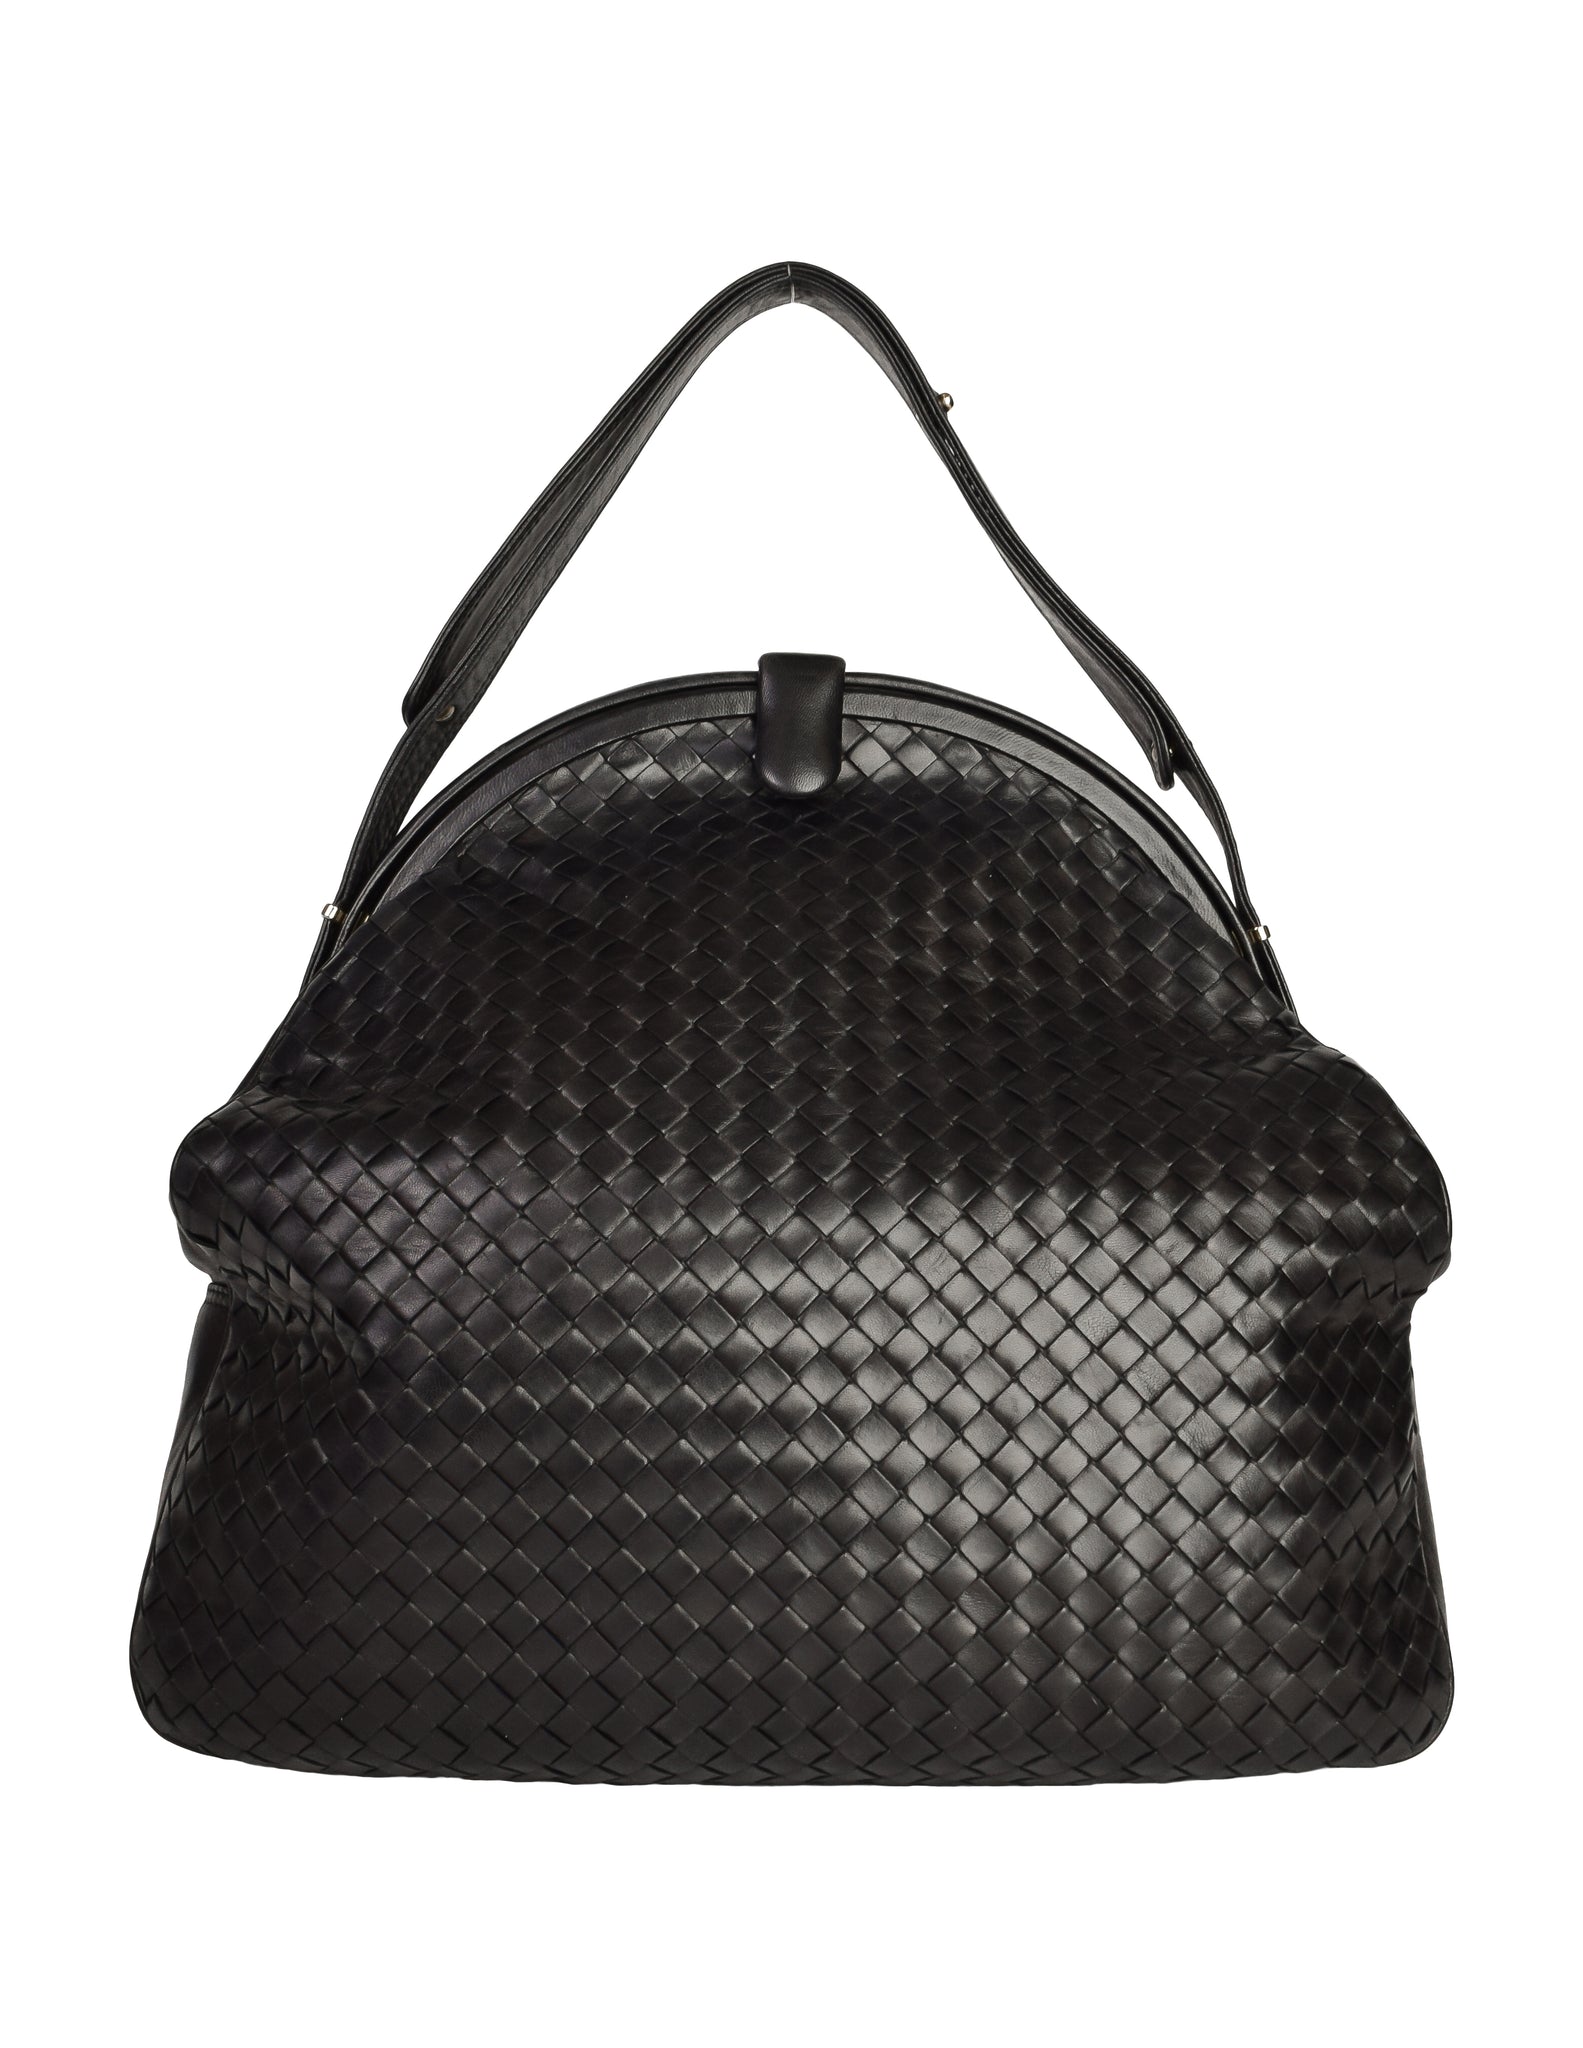 Bottega Veneta Vintage Massive Intrecciato Woven Black Leather Shoulder Bag